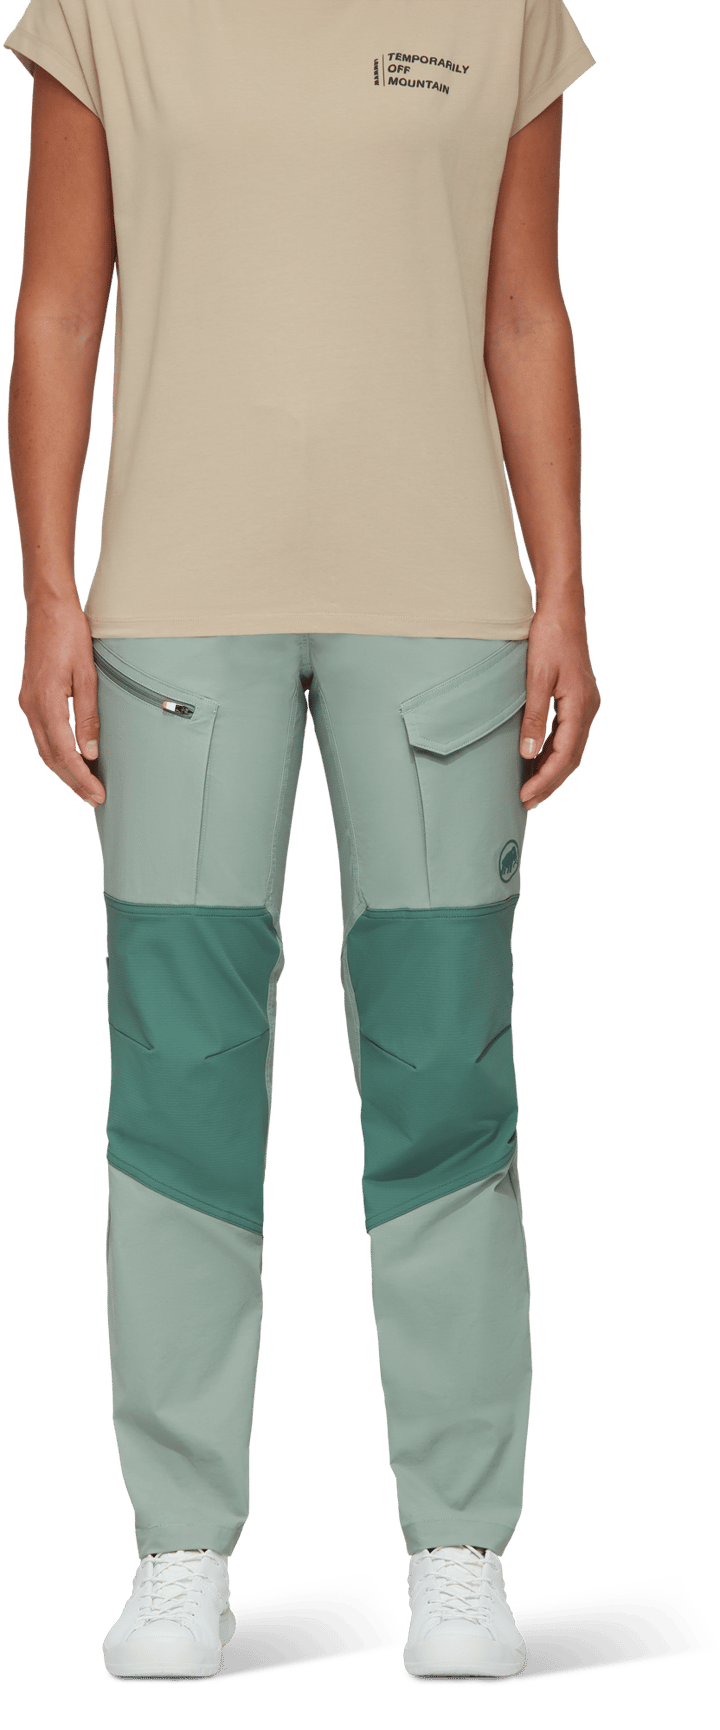 Women's Zinal Hybrid Pants jade-dark jade Mammut